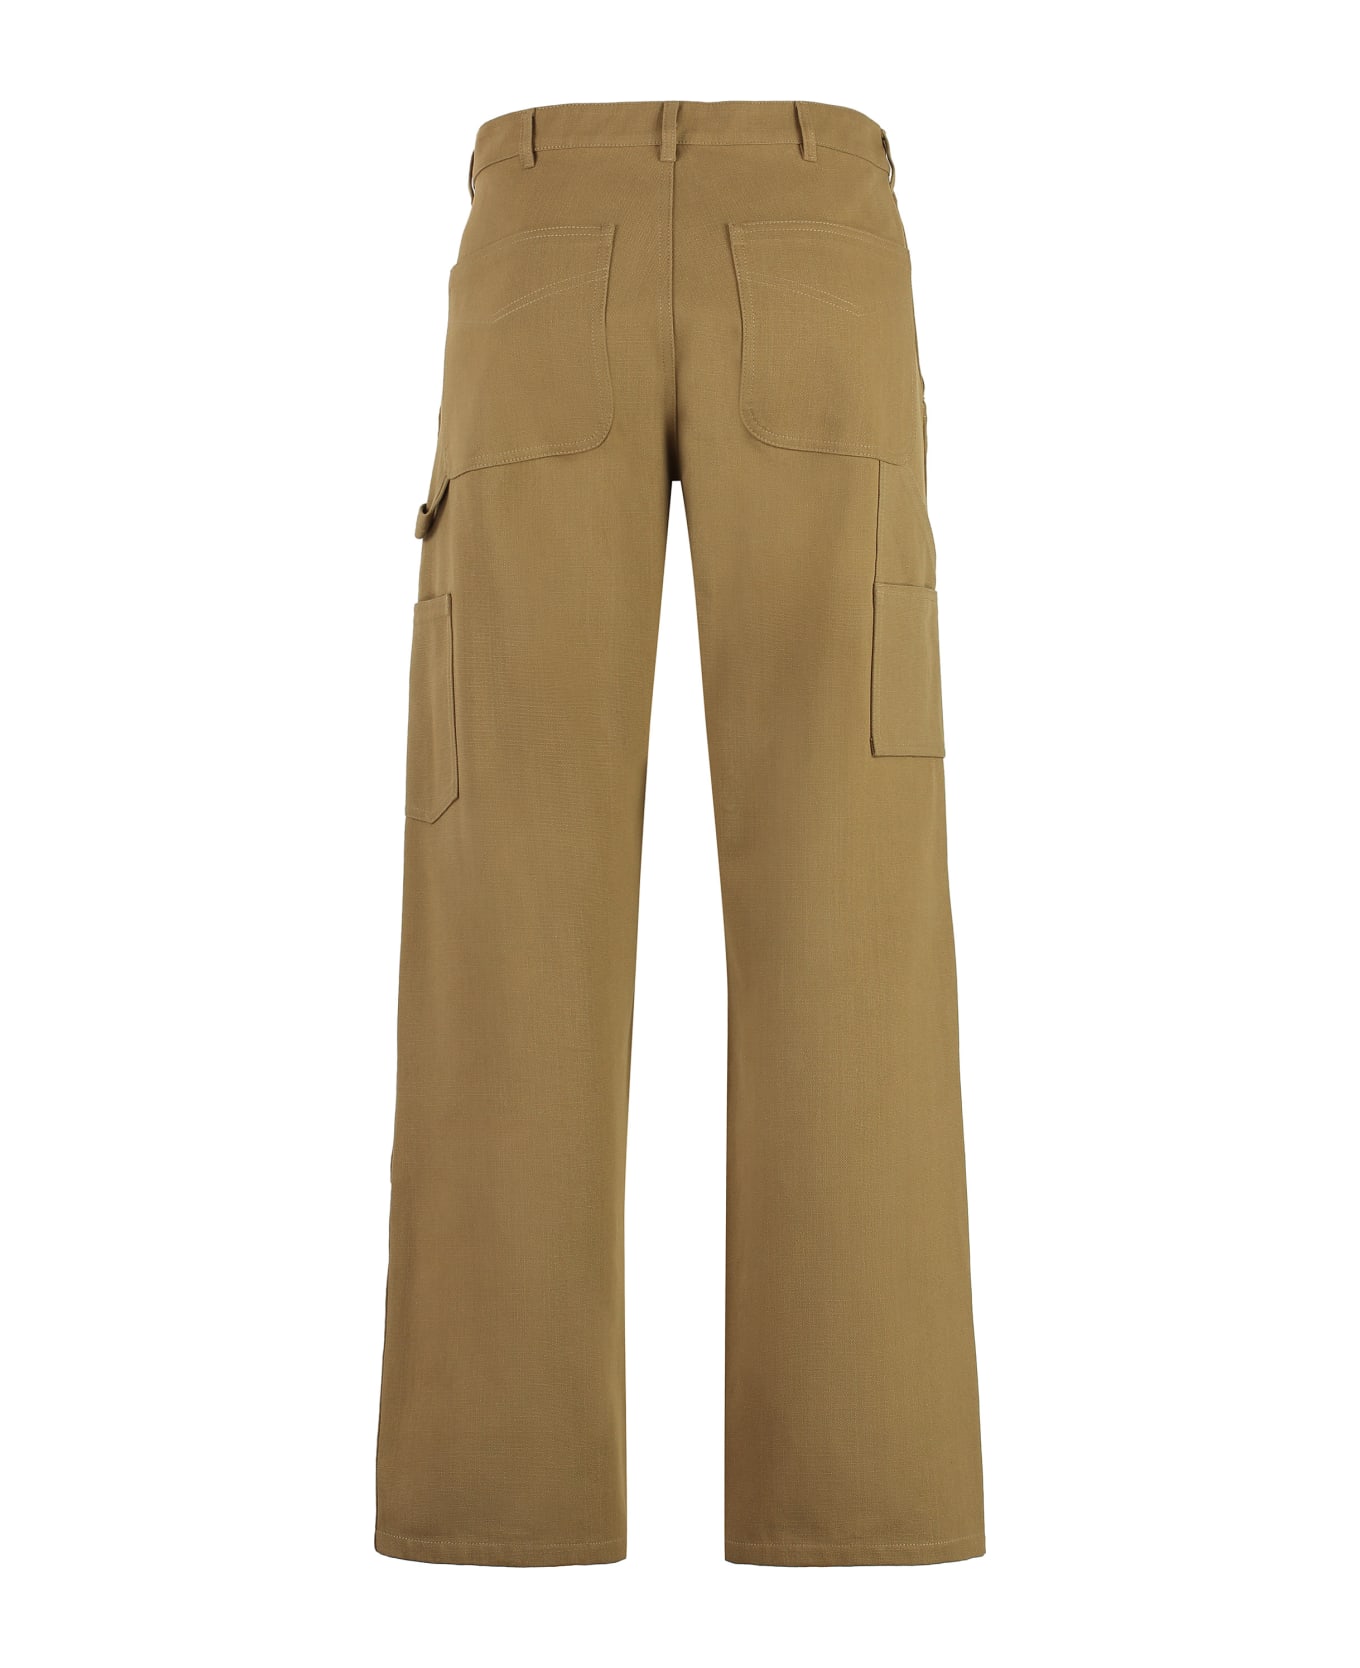 Moncler Genius Moncler X Roc Nation Designed By Jay-z - Cotton Cargo-trousers - Beige